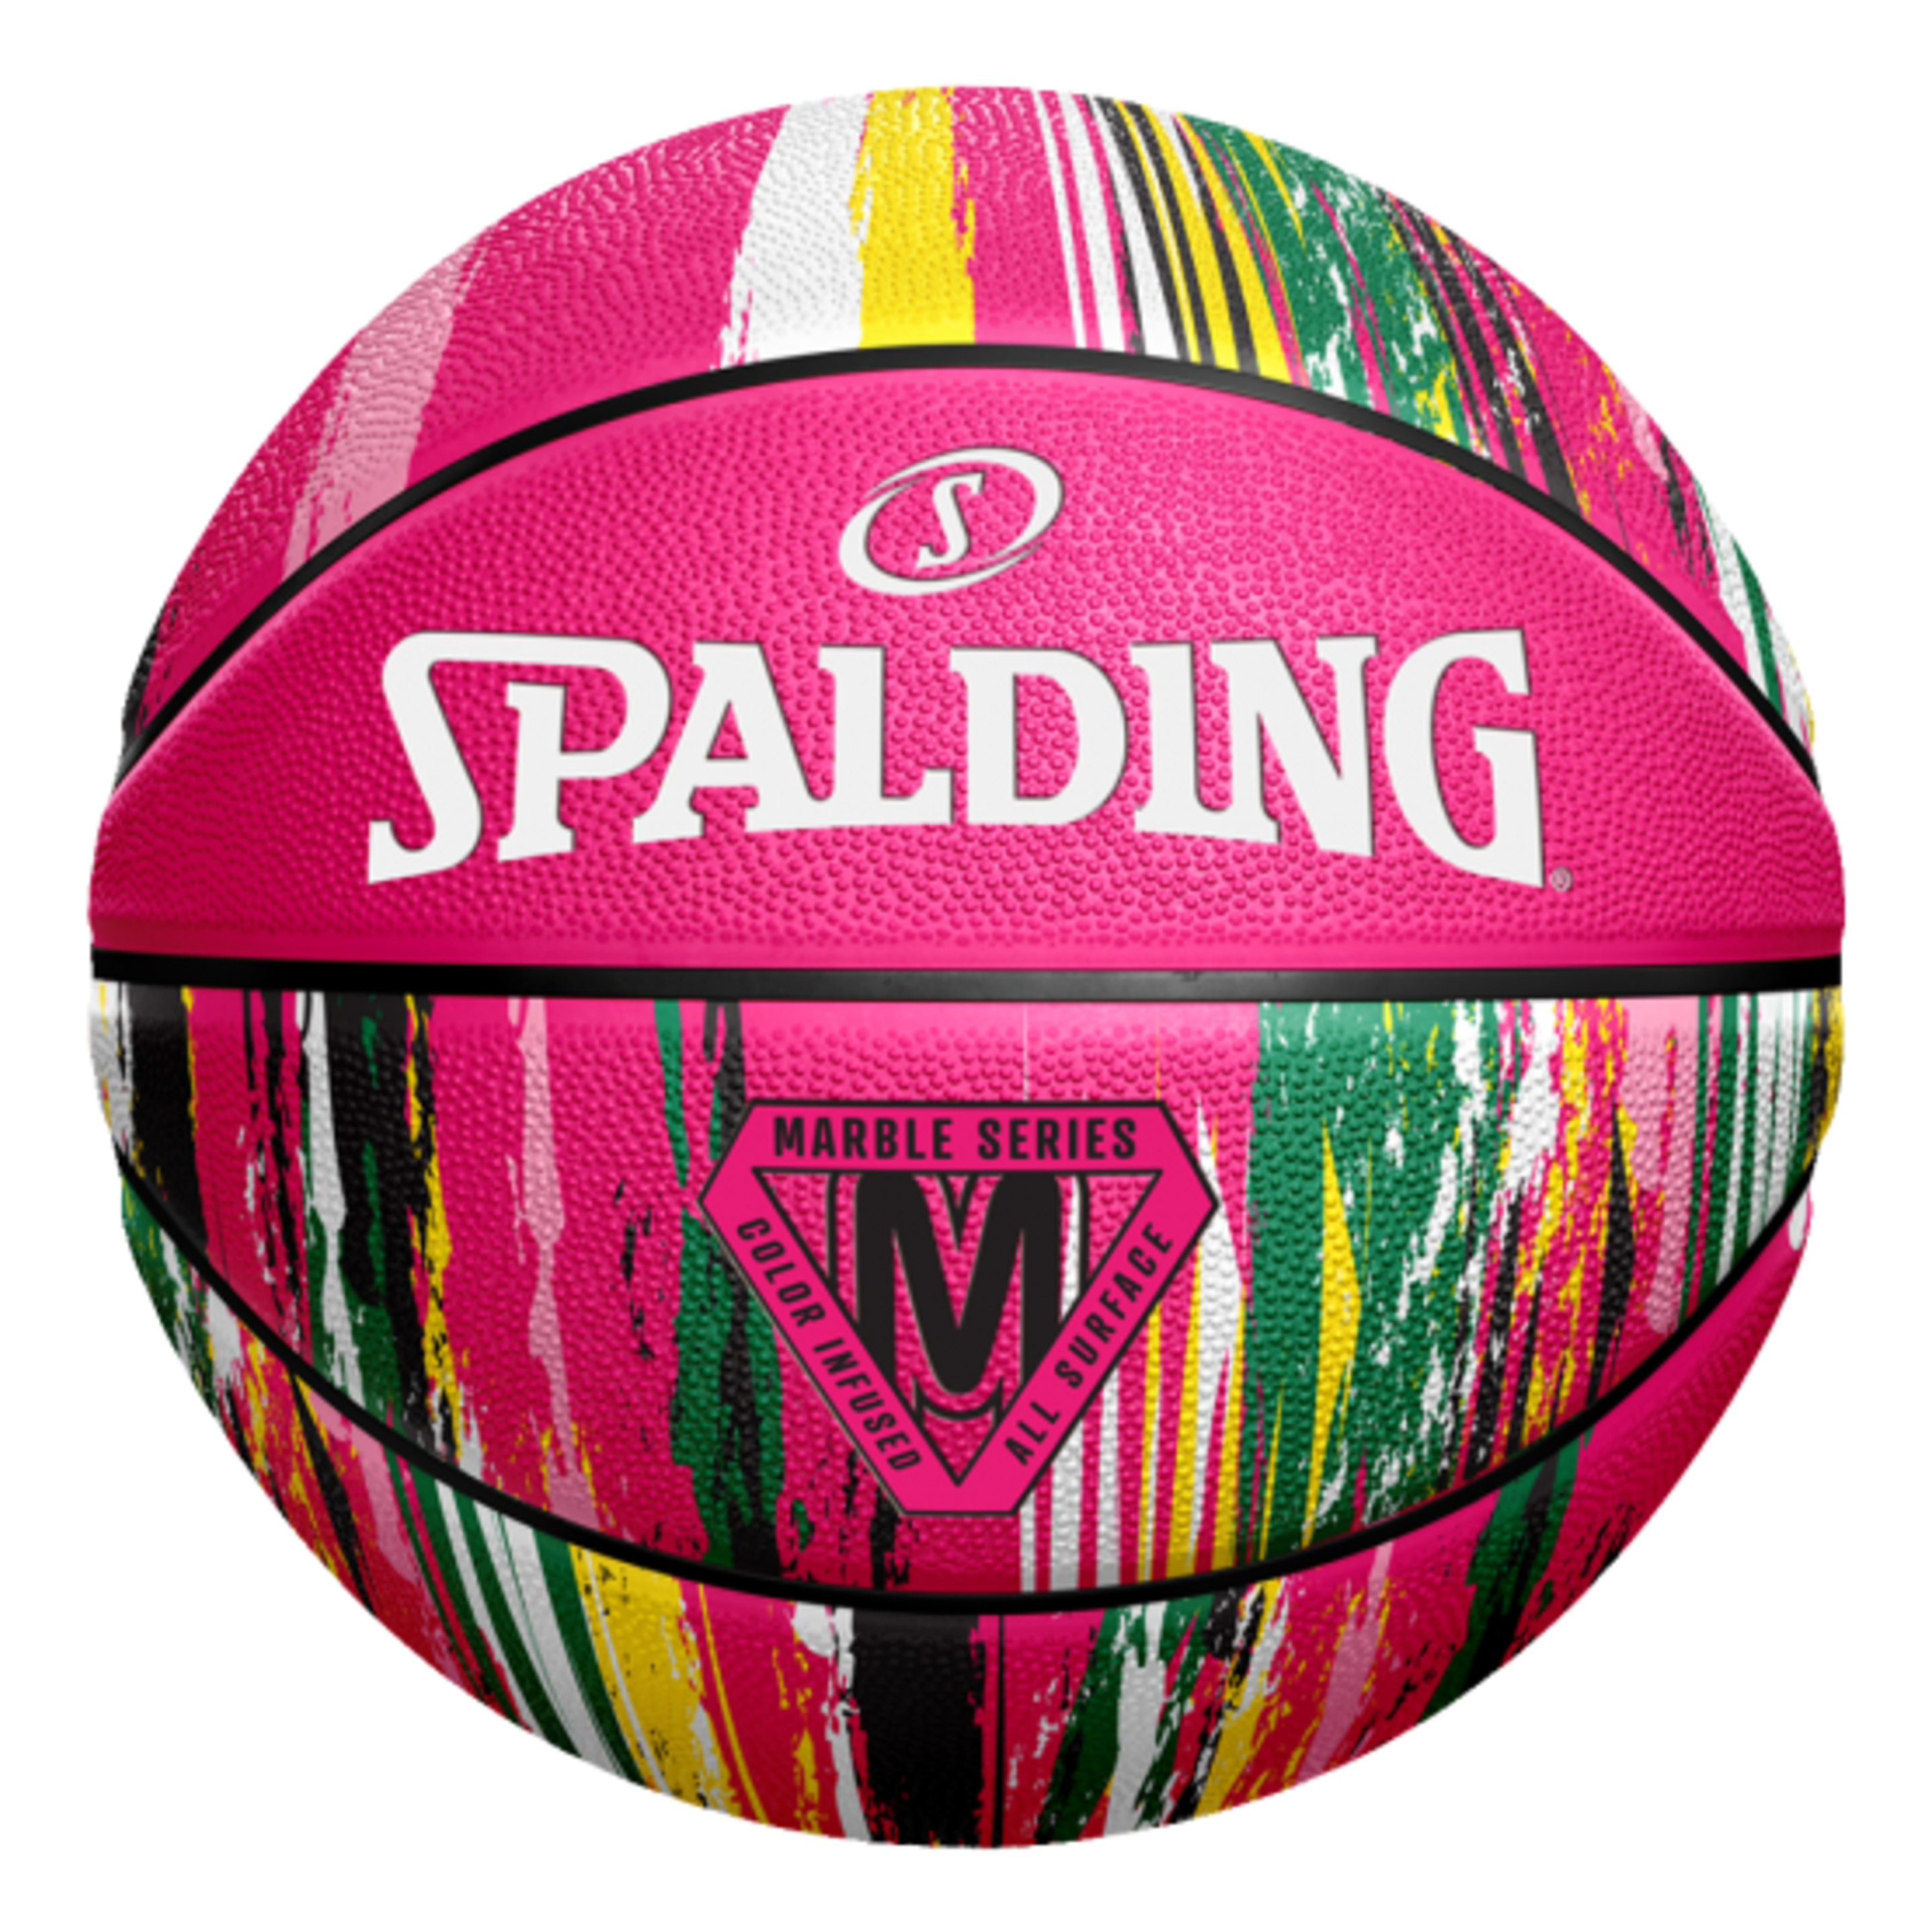 Basquete Spalding Marble Series Pink Sz6